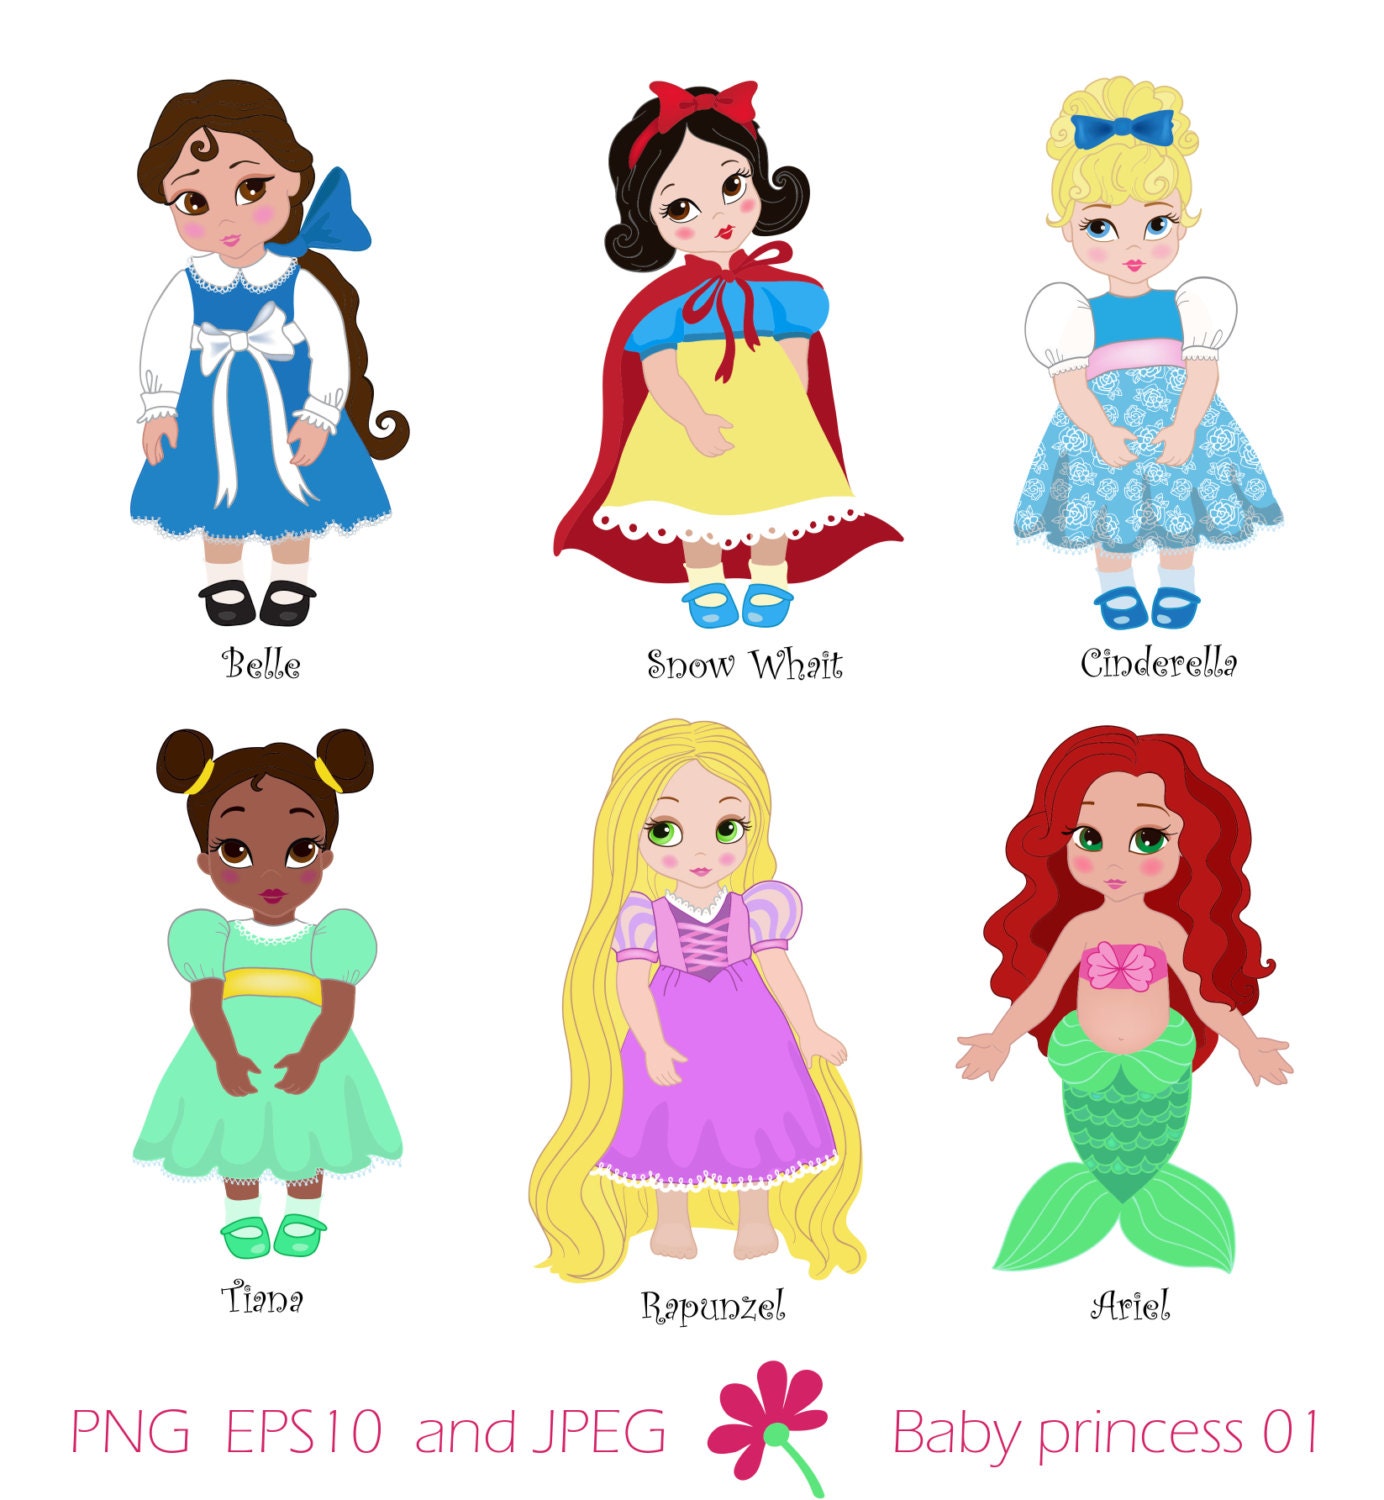 Baby princess Disney vectorizada - Imagui